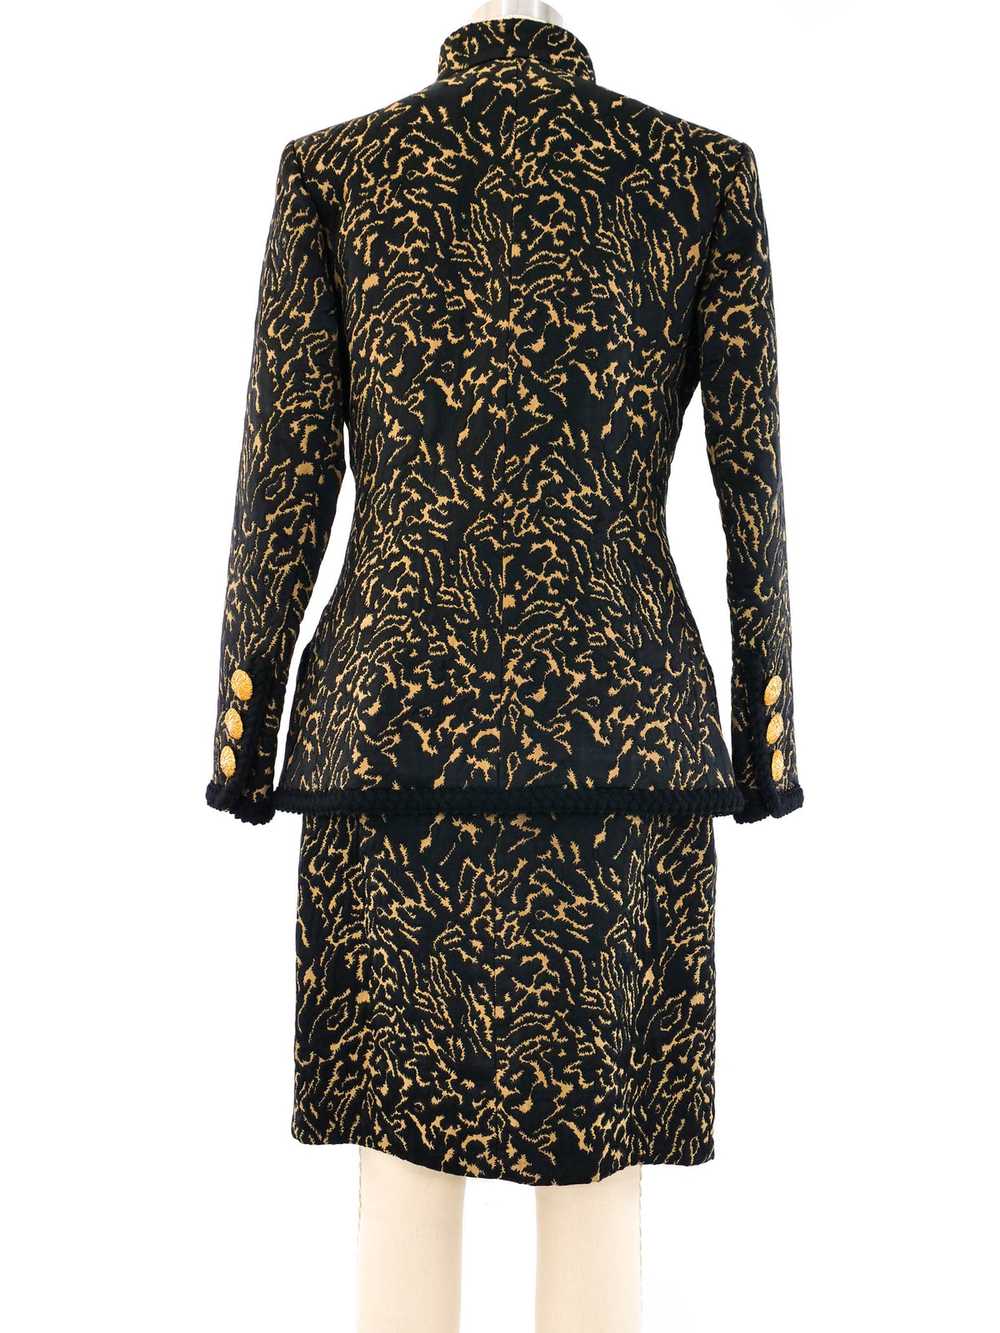 Yves Saint Laurent Brocade Skirt Suit - image 4